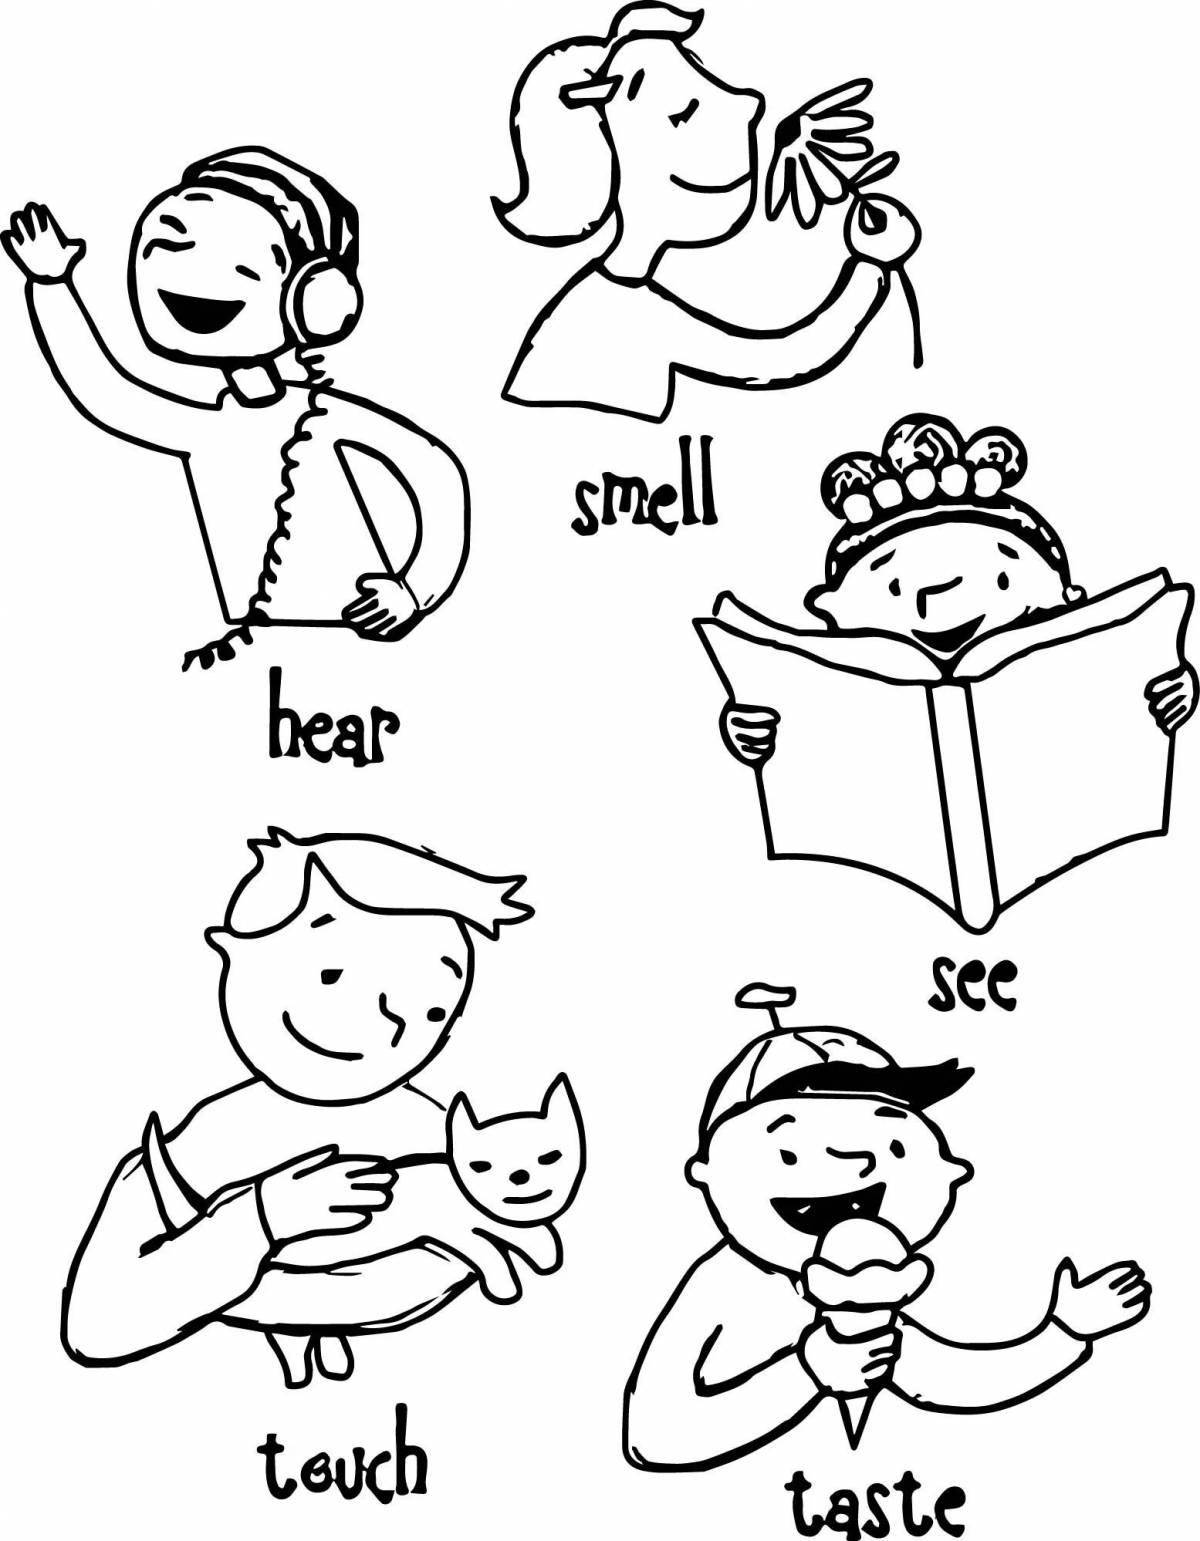 Coloring page of joyful verbs